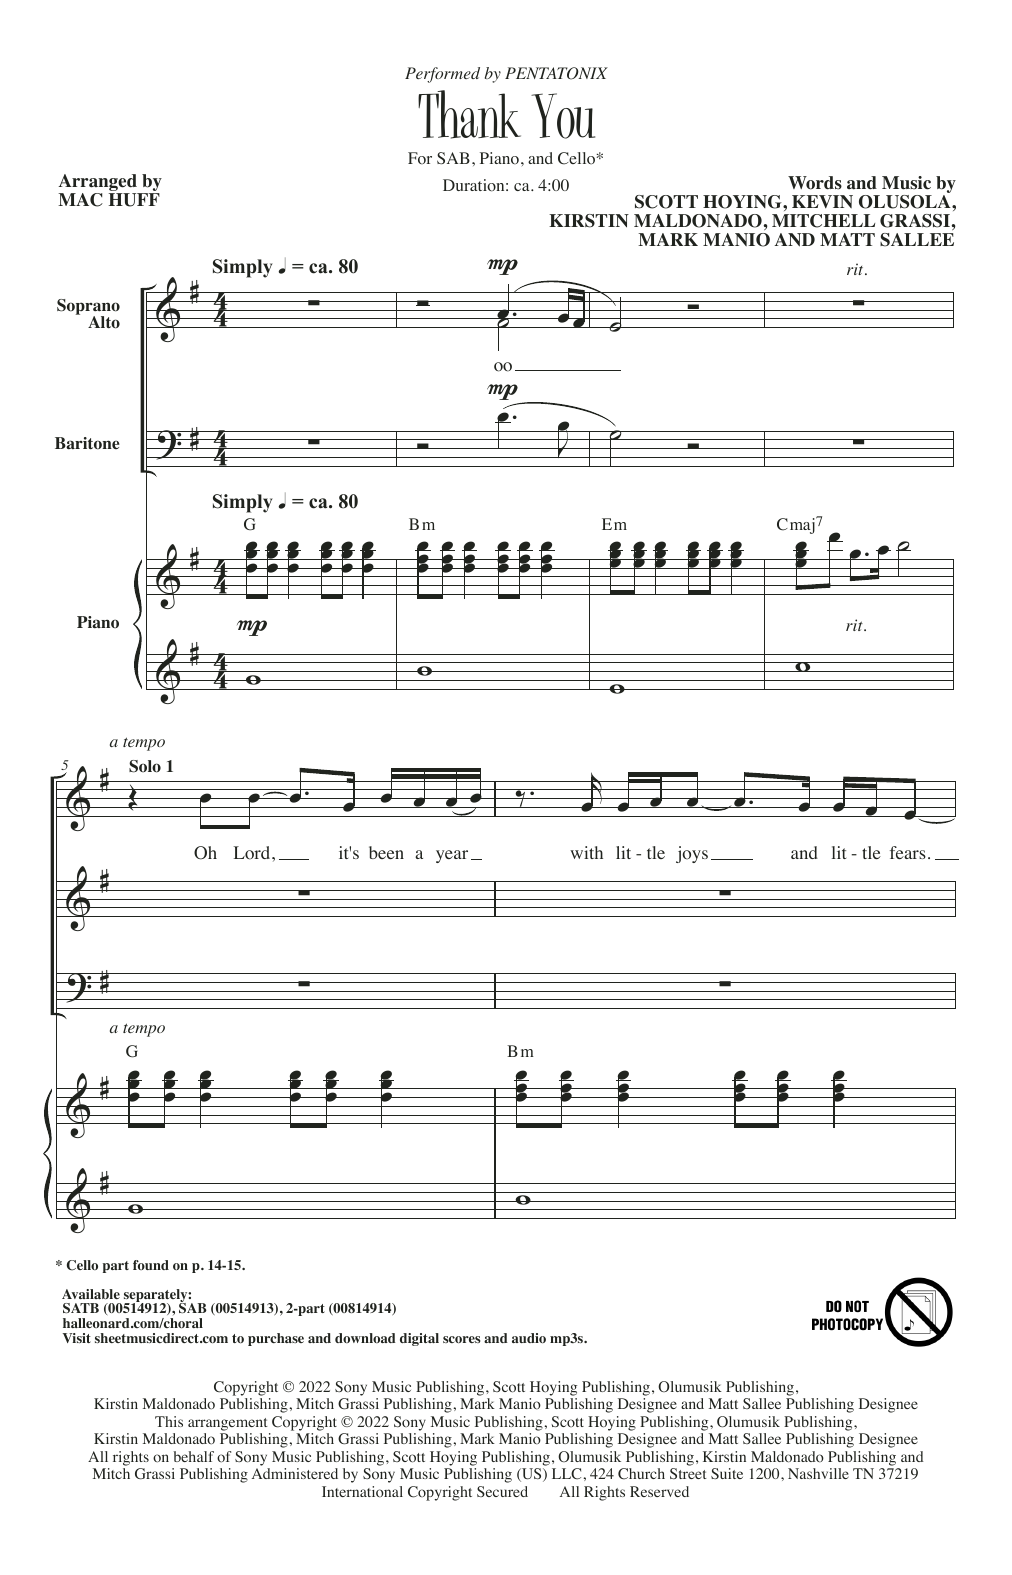 Pentatonix Thank You (arr. Mac Huff) Sheet Music Notes & Chords for SAB Choir - Download or Print PDF